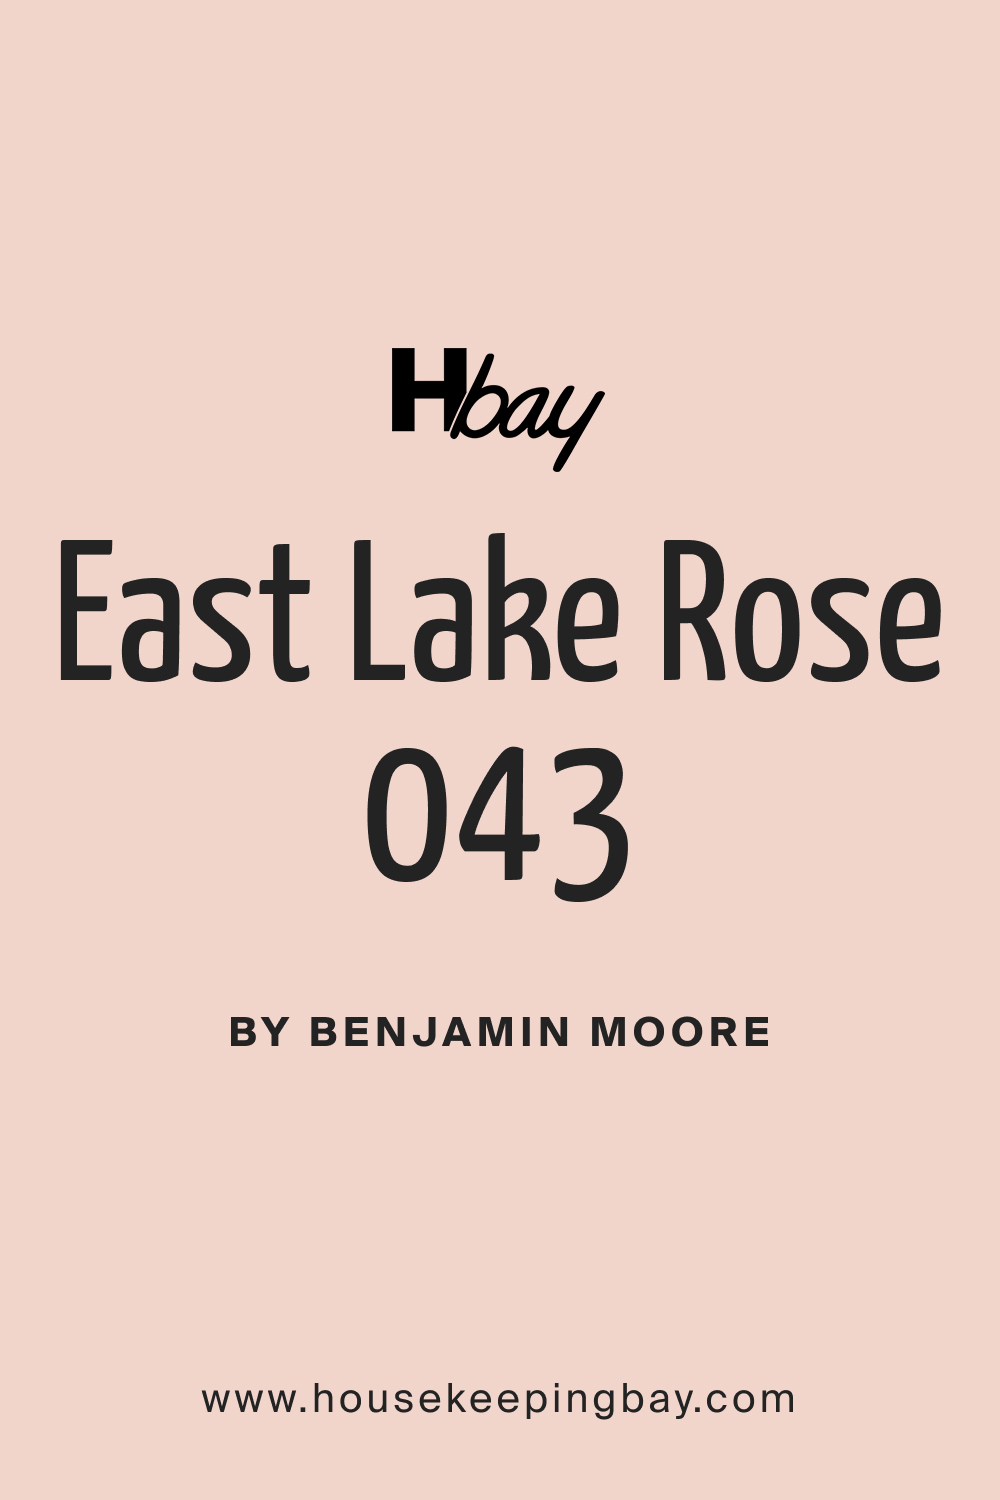 BM East Lake Rose 043 Paint Color by Benjamin Moore